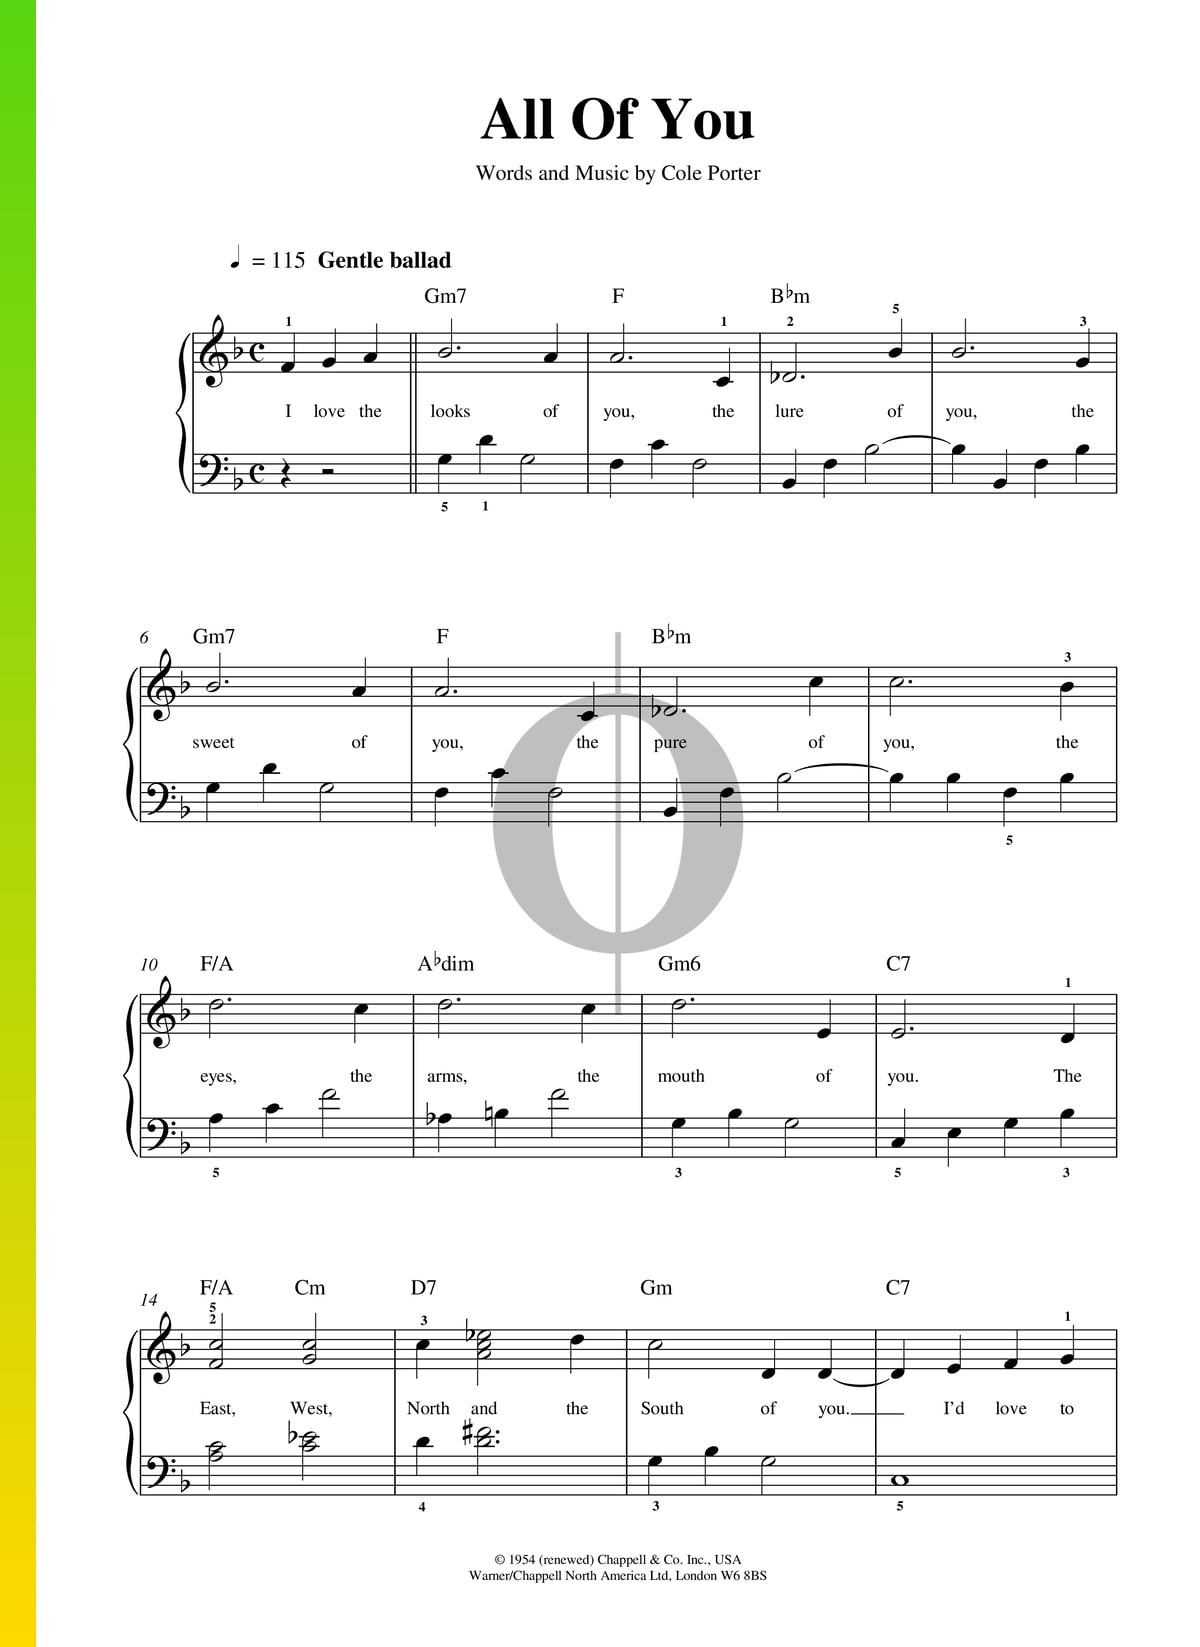 mecánico insuficiente Anuncio All Of You Partitura » Cole Porter (Piano, Voz) | Descarga PDF - OKTAV